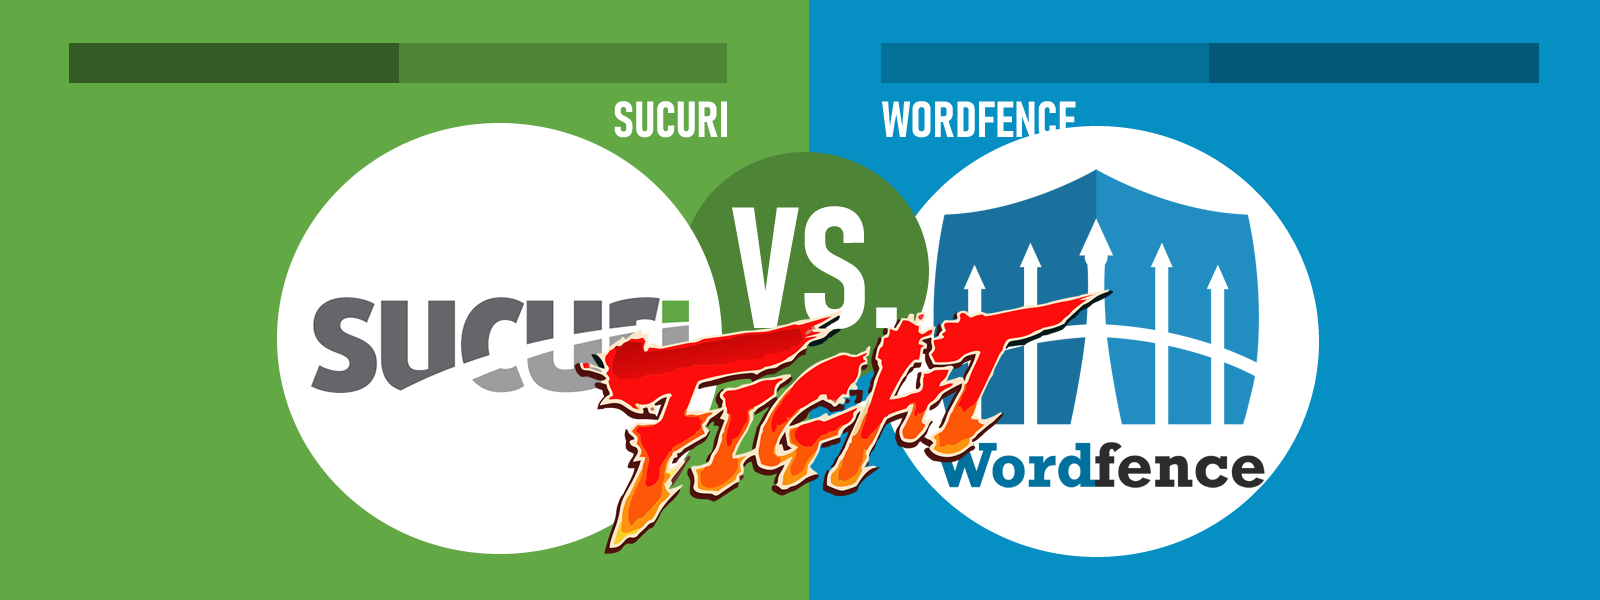 Wordfence vs Sucuri: un paseo sobre cuál elegir para proteger tu WordPress